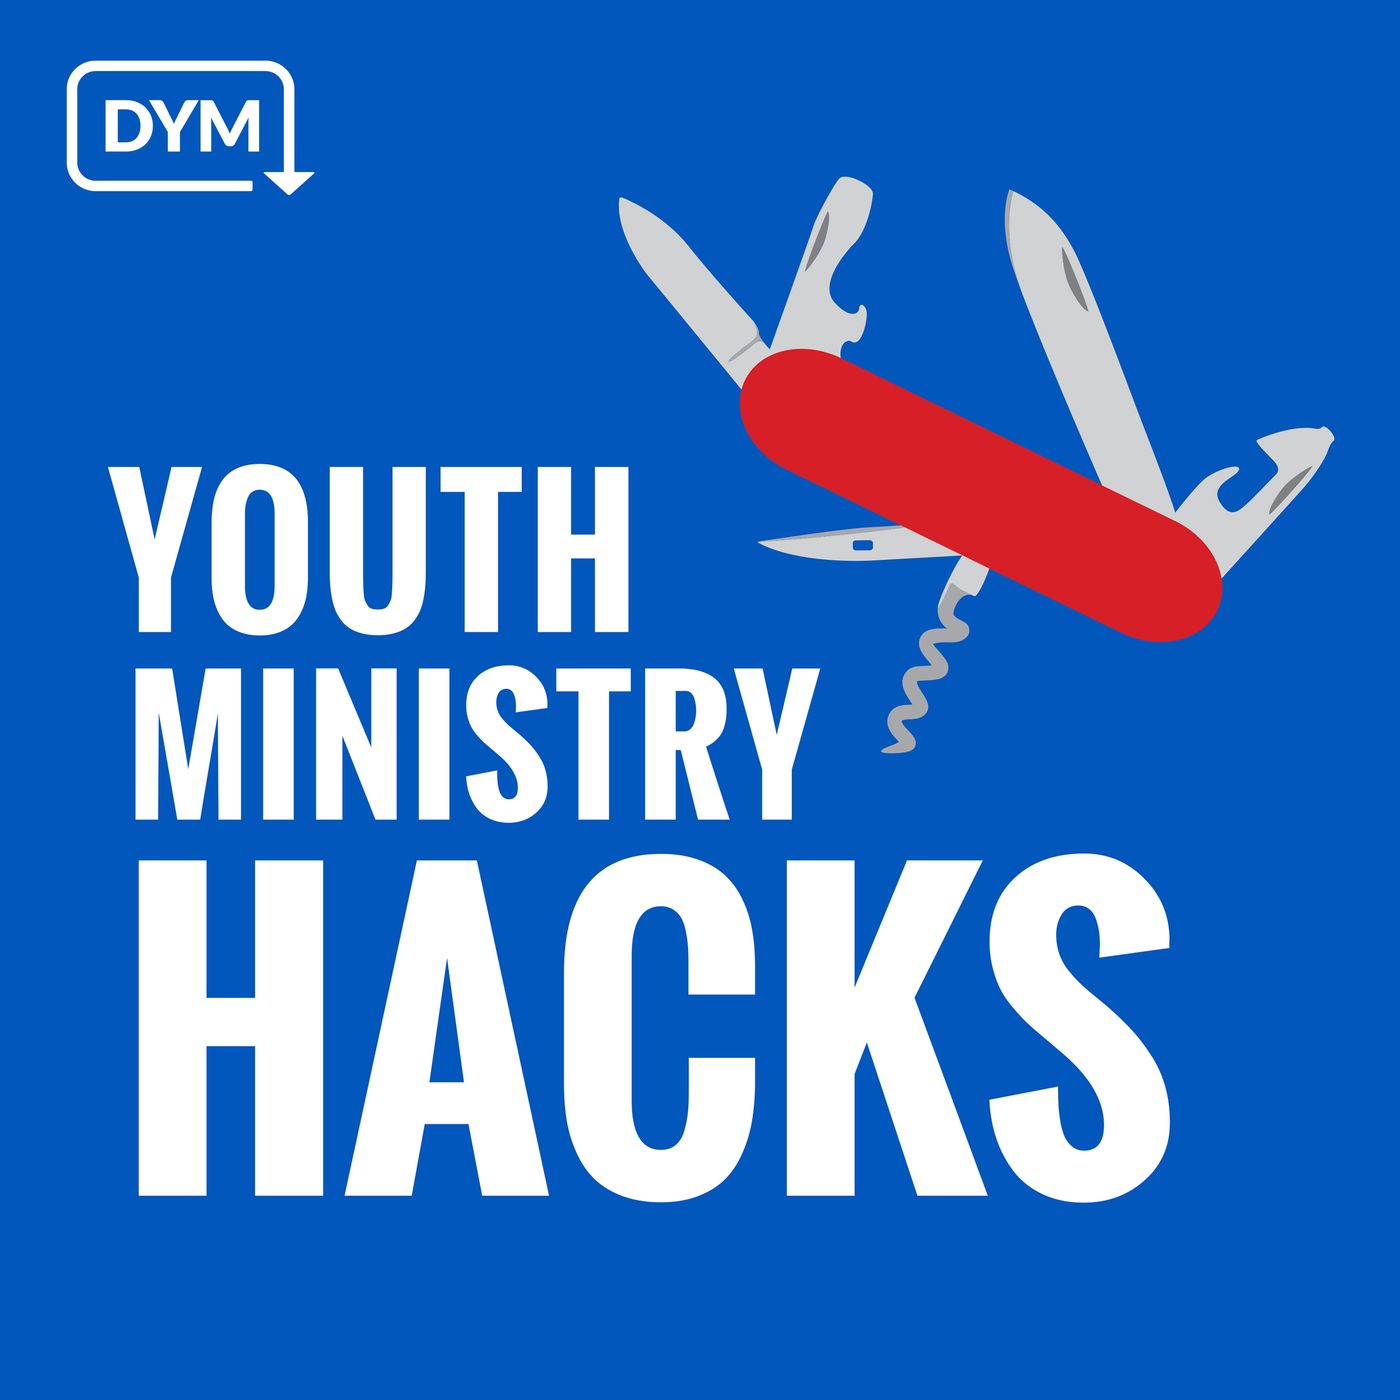 Episode 121: Hacks On Seasonal Approach To Ministry